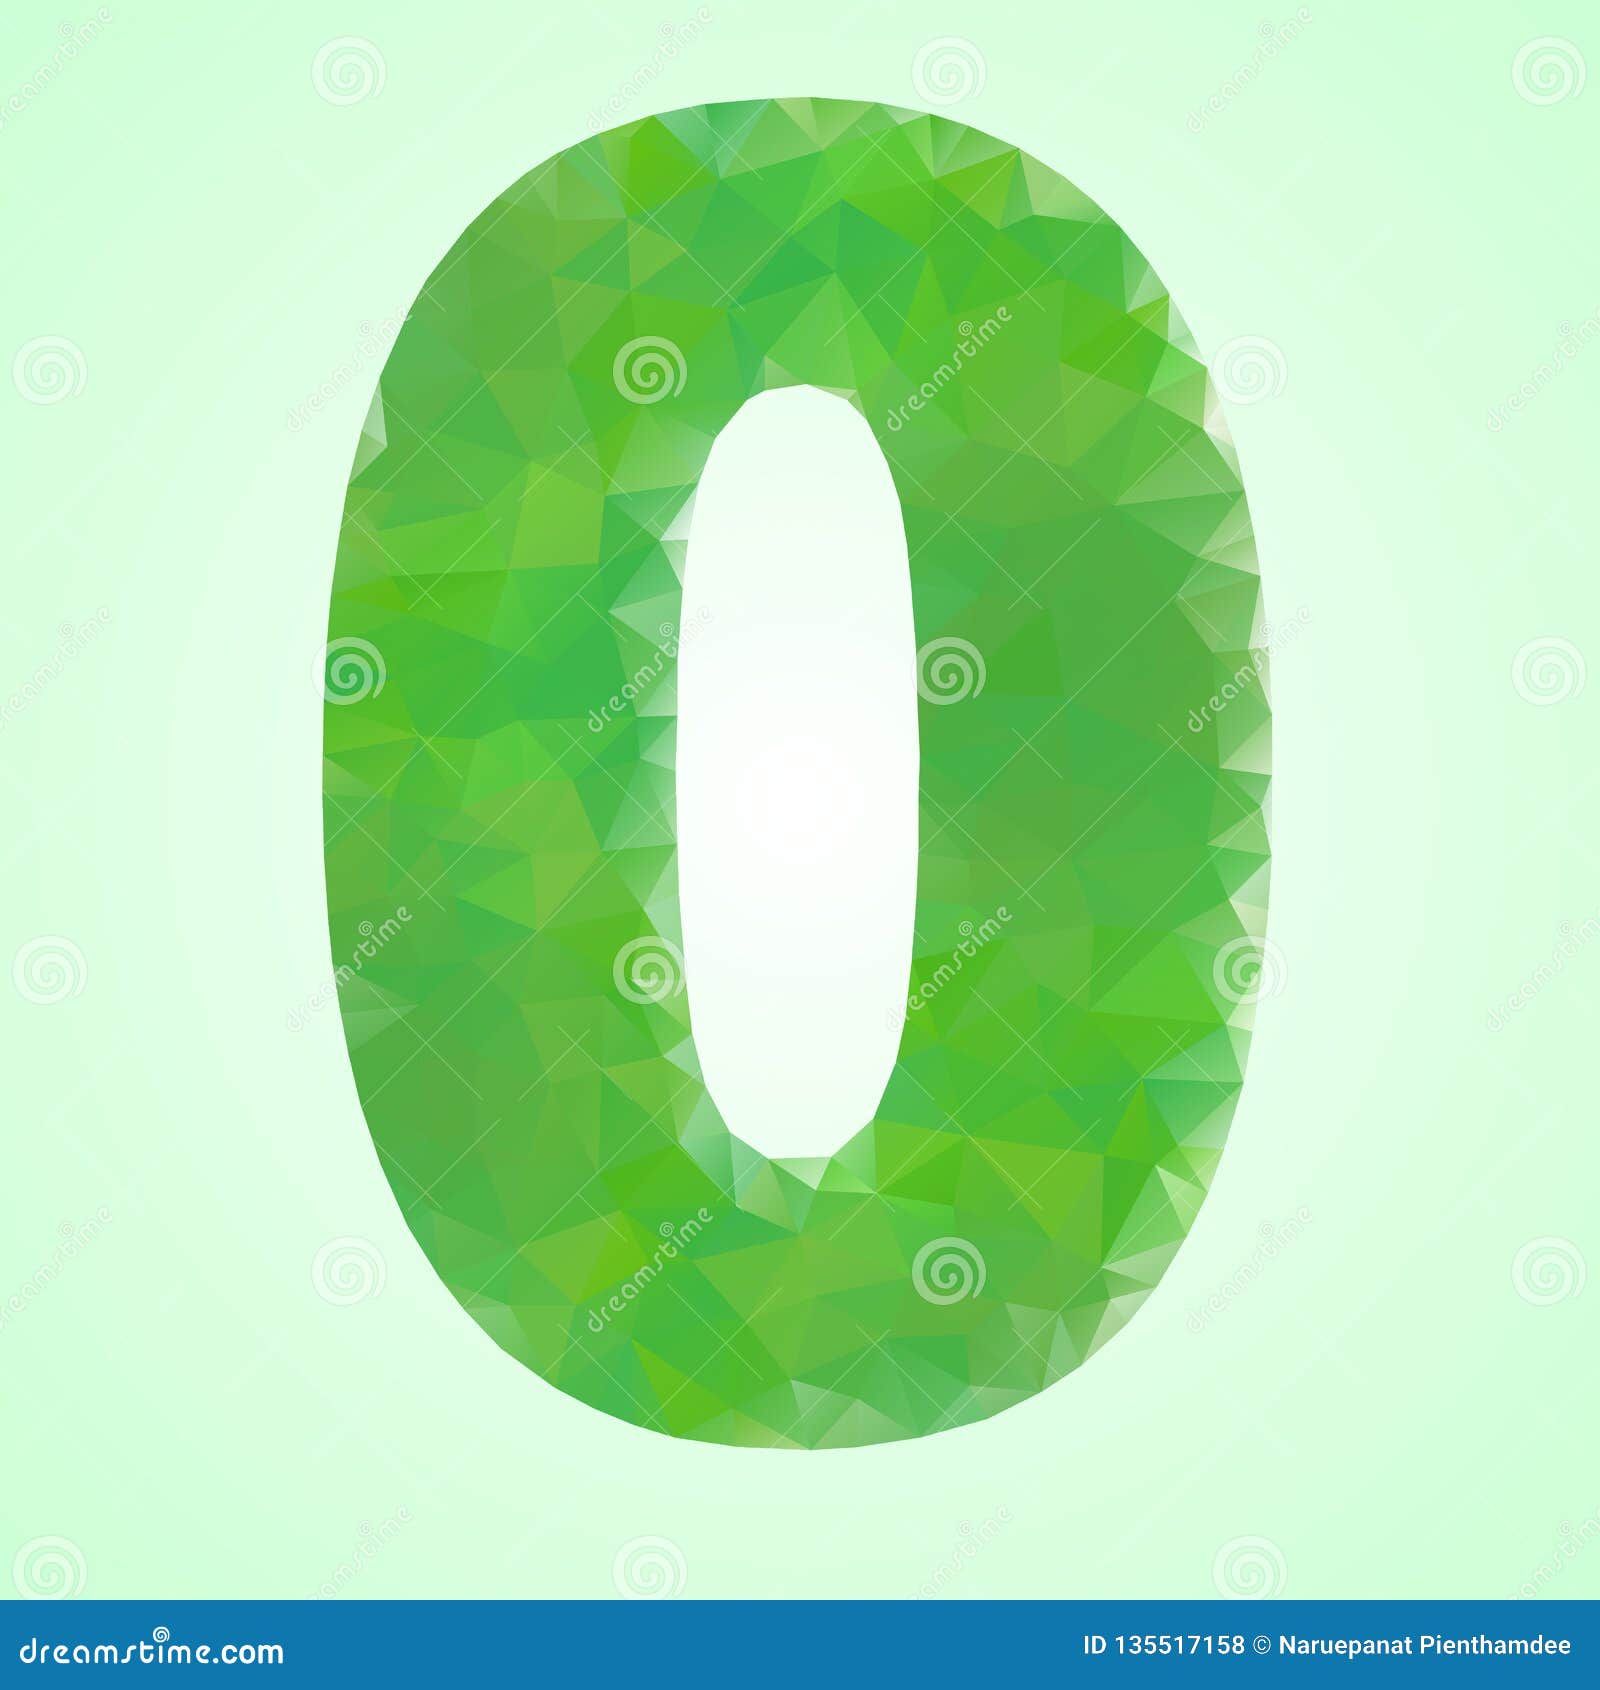 Number 0 Color Green Crystal Stock Vector - Illustration of prism